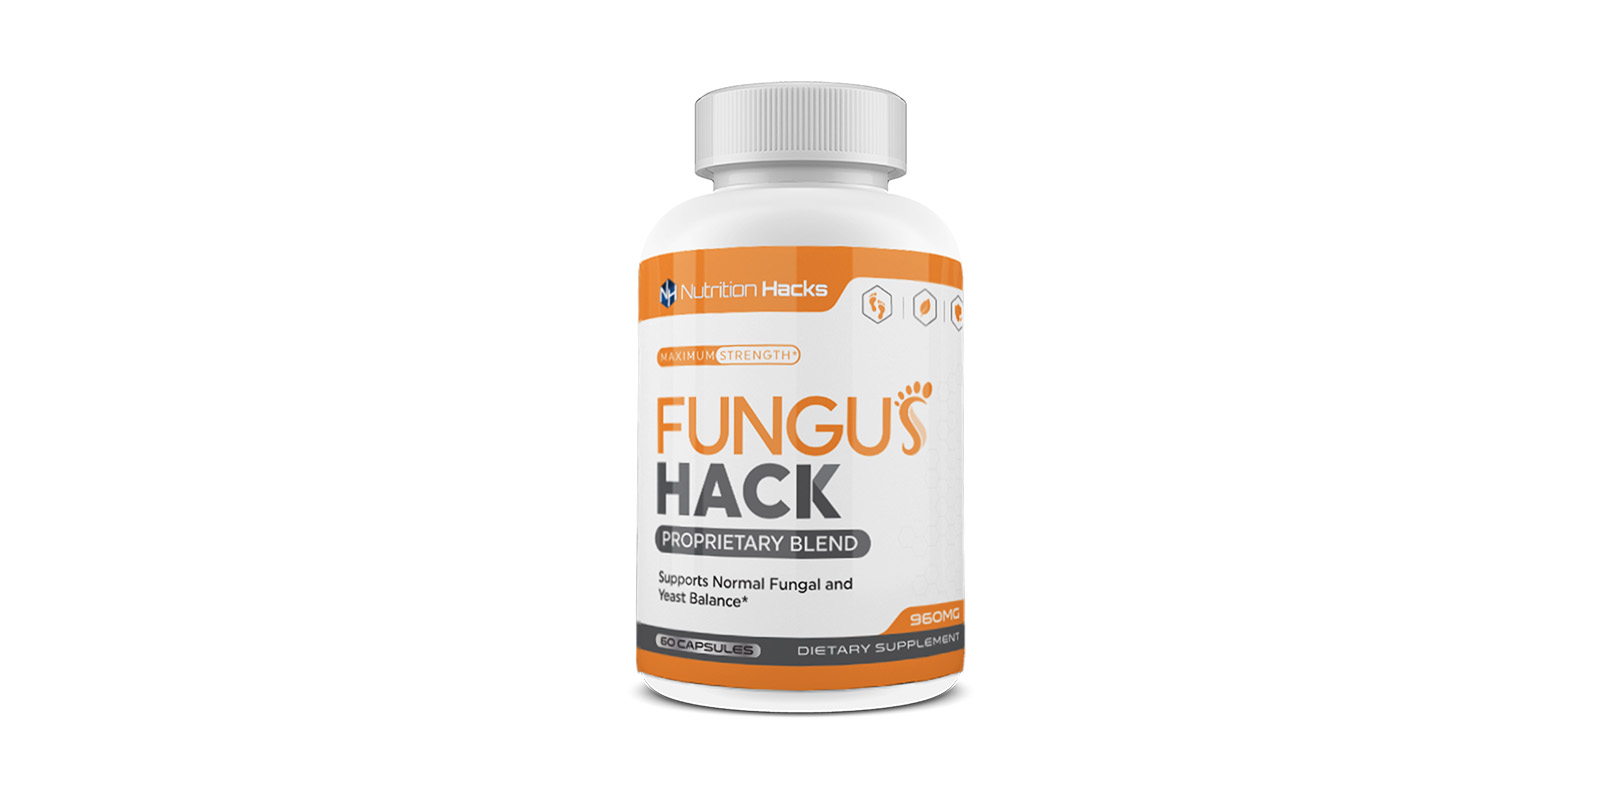 Fungus Hacks Reviews